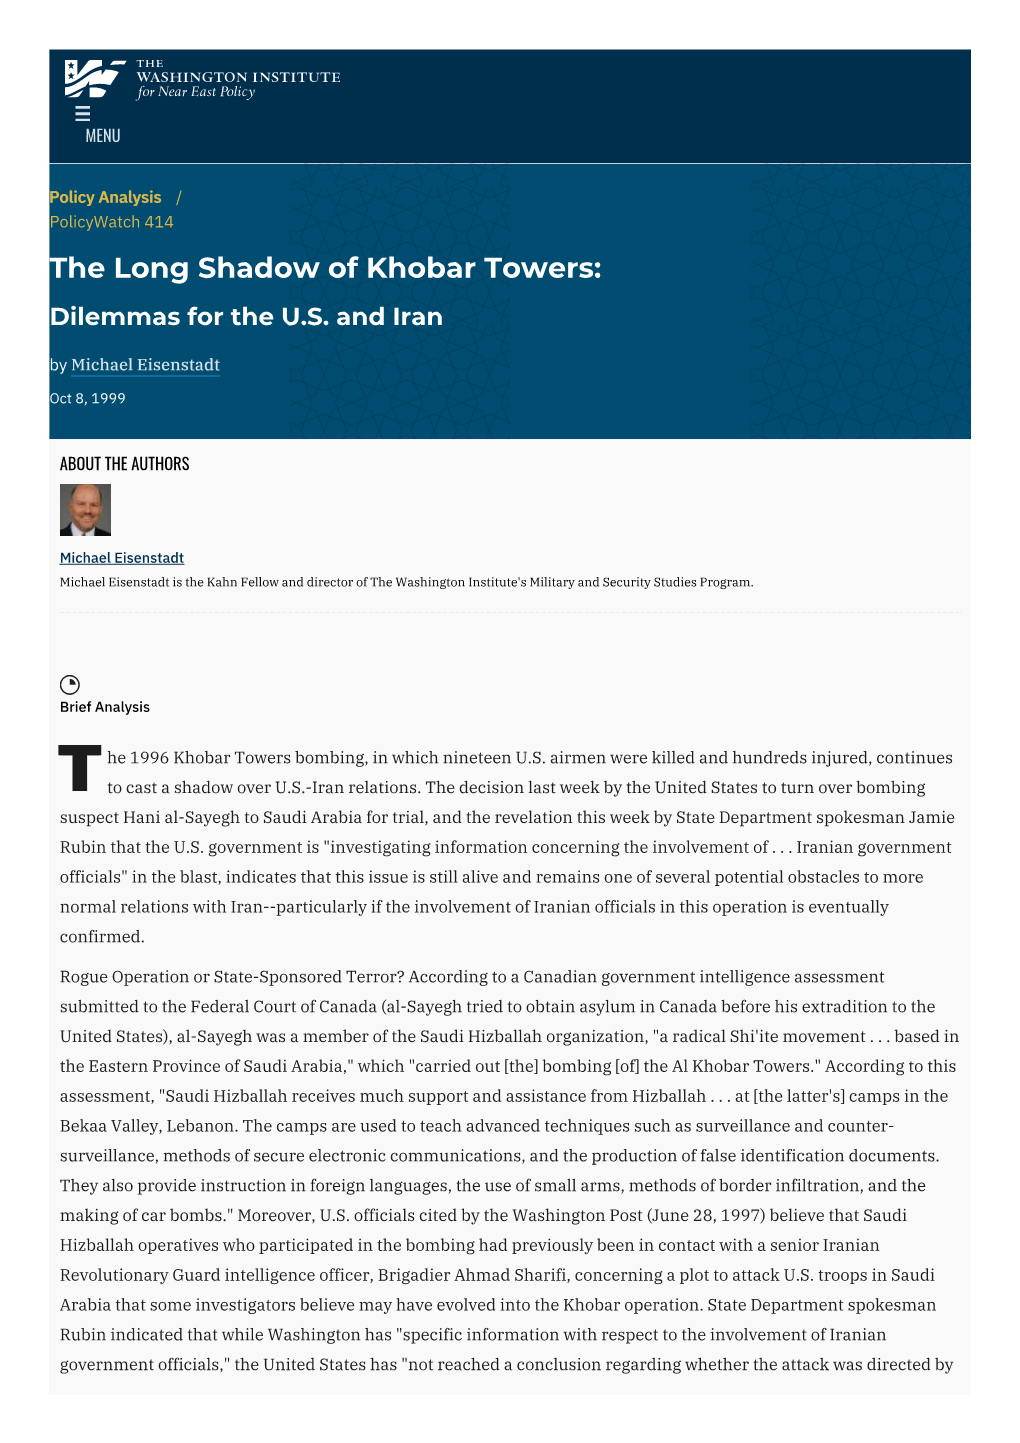 The Long Shadow of Khobar Towers: Dilemmas for the U.S